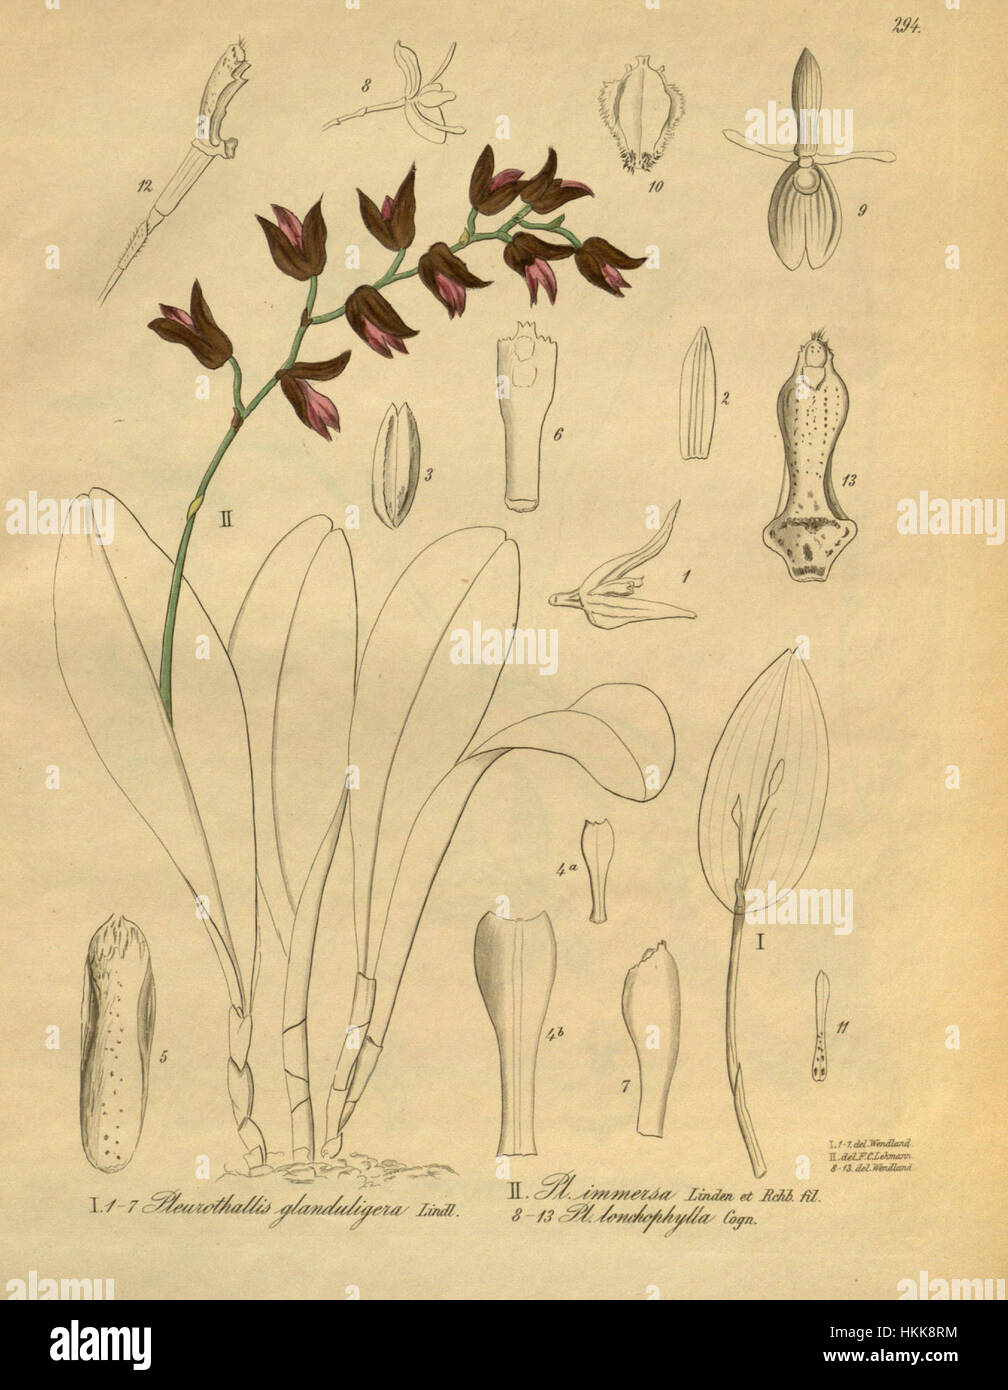 Acianthera glanduligera (as Pleurothallis glanduligera) - Stelis immersa (as Pl. immersa) - Myoxanthus lonchophyllus (as Pl. lonchofila) -Xenia 3-294 (1900) Stock Photo